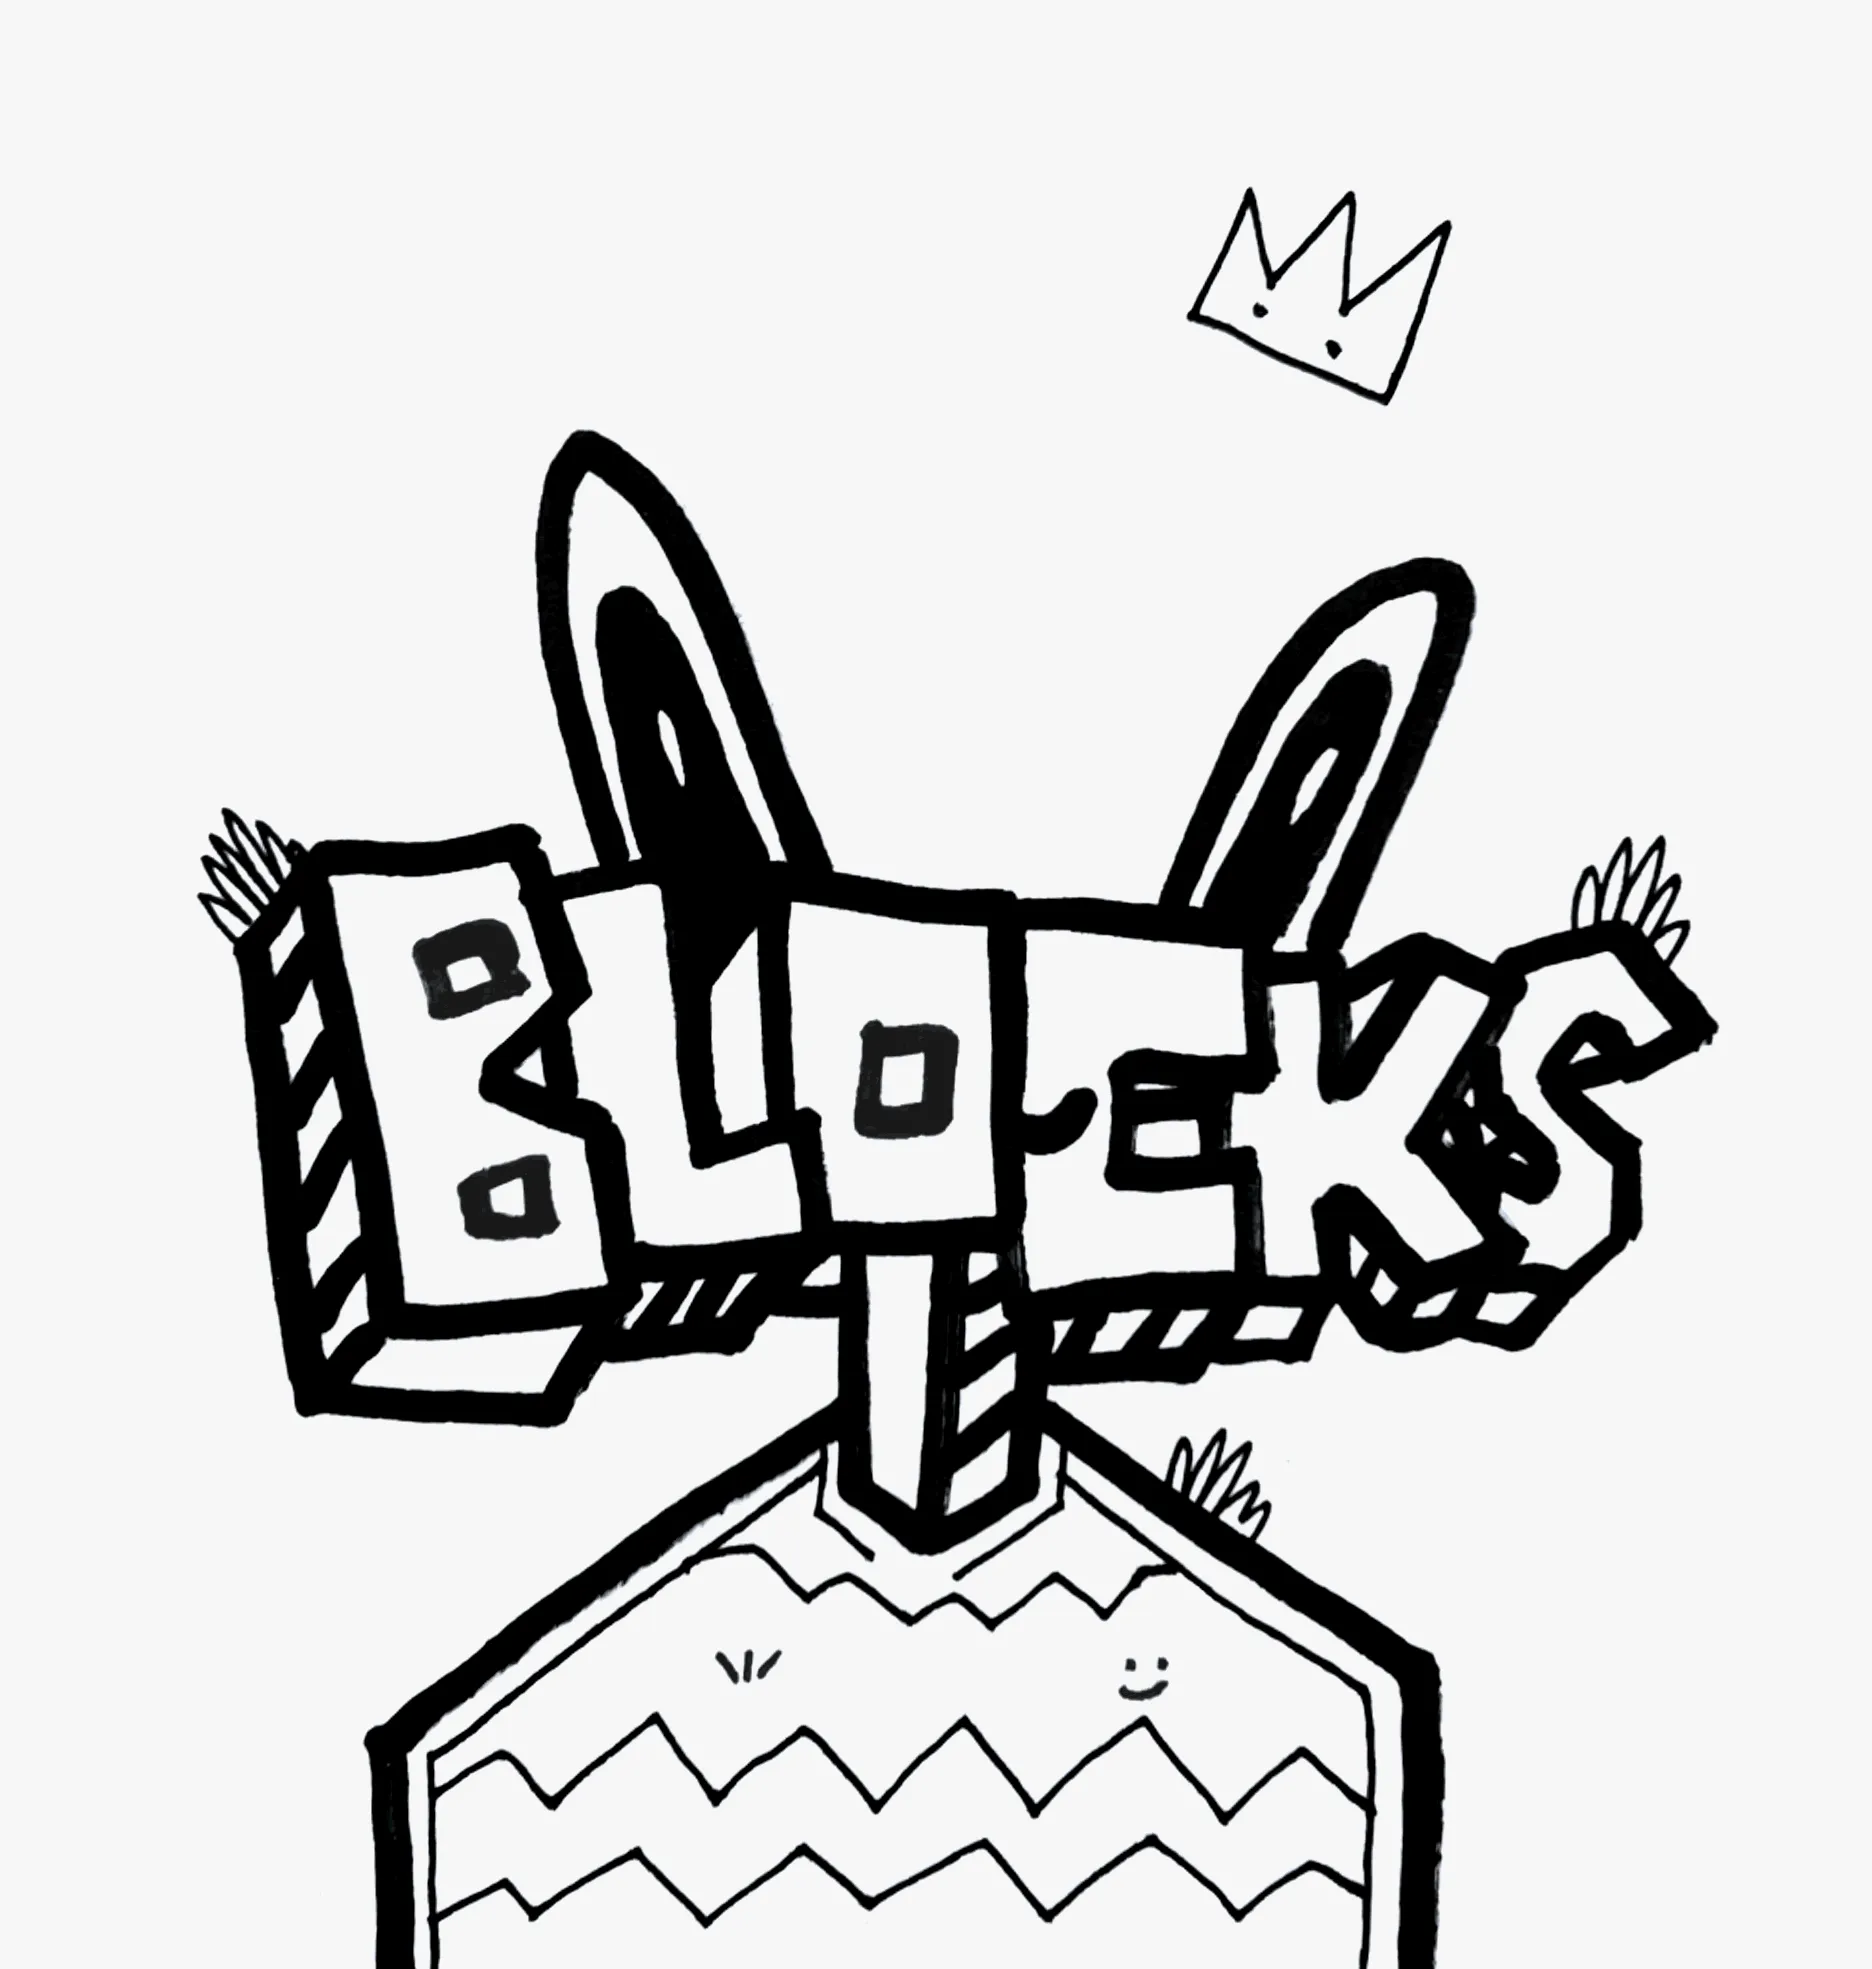 BOLD BLOCKS by harvmcm